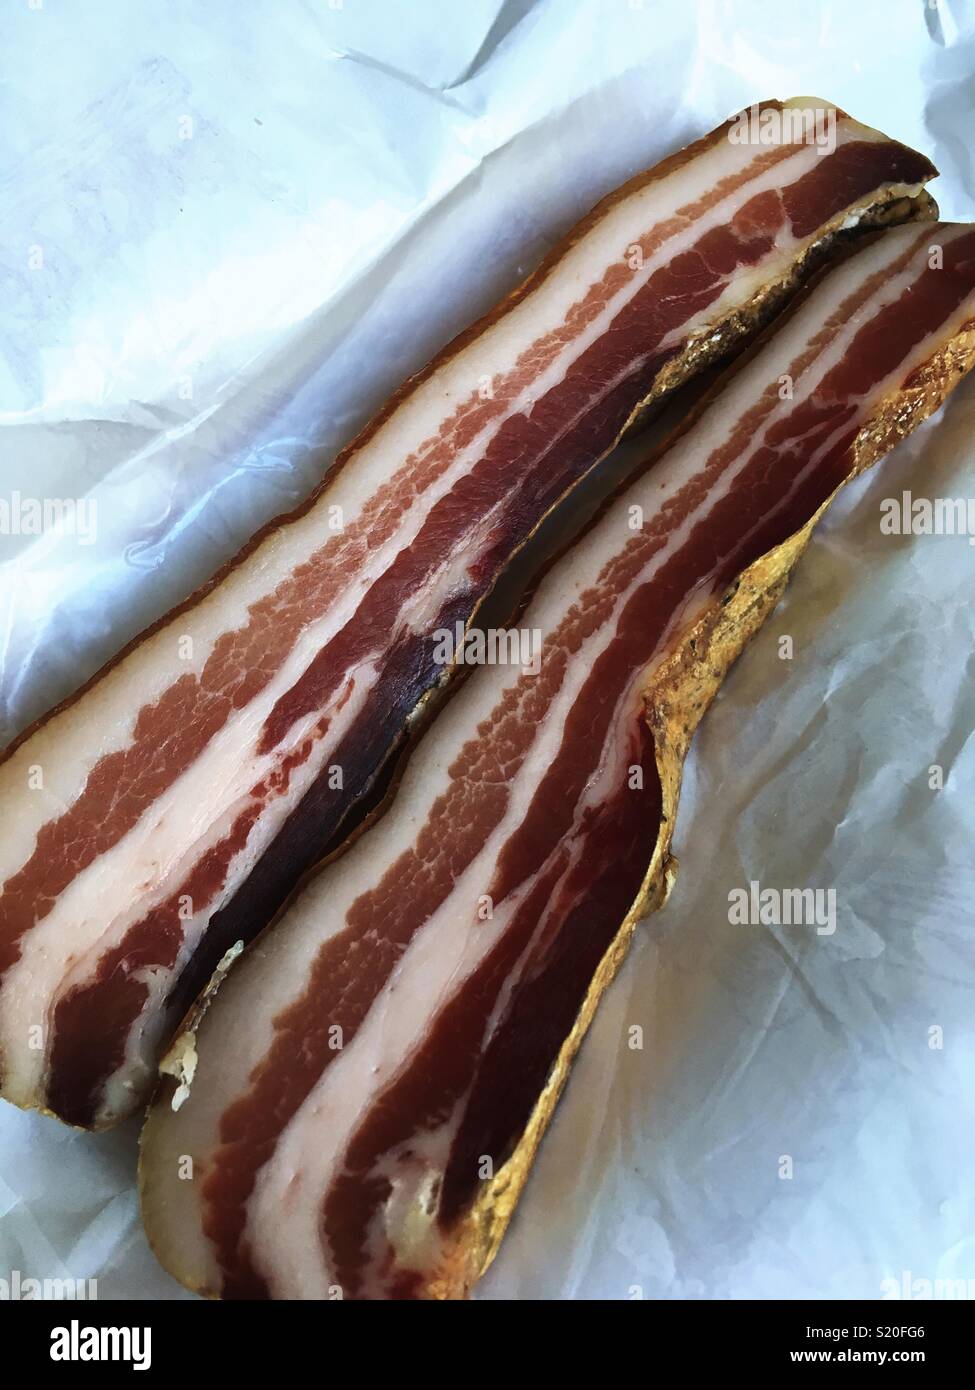 https://c8.alamy.com/comp/S20FG6/italian-pancetta-bacon-on-wrapping-paper-S20FG6.jpg